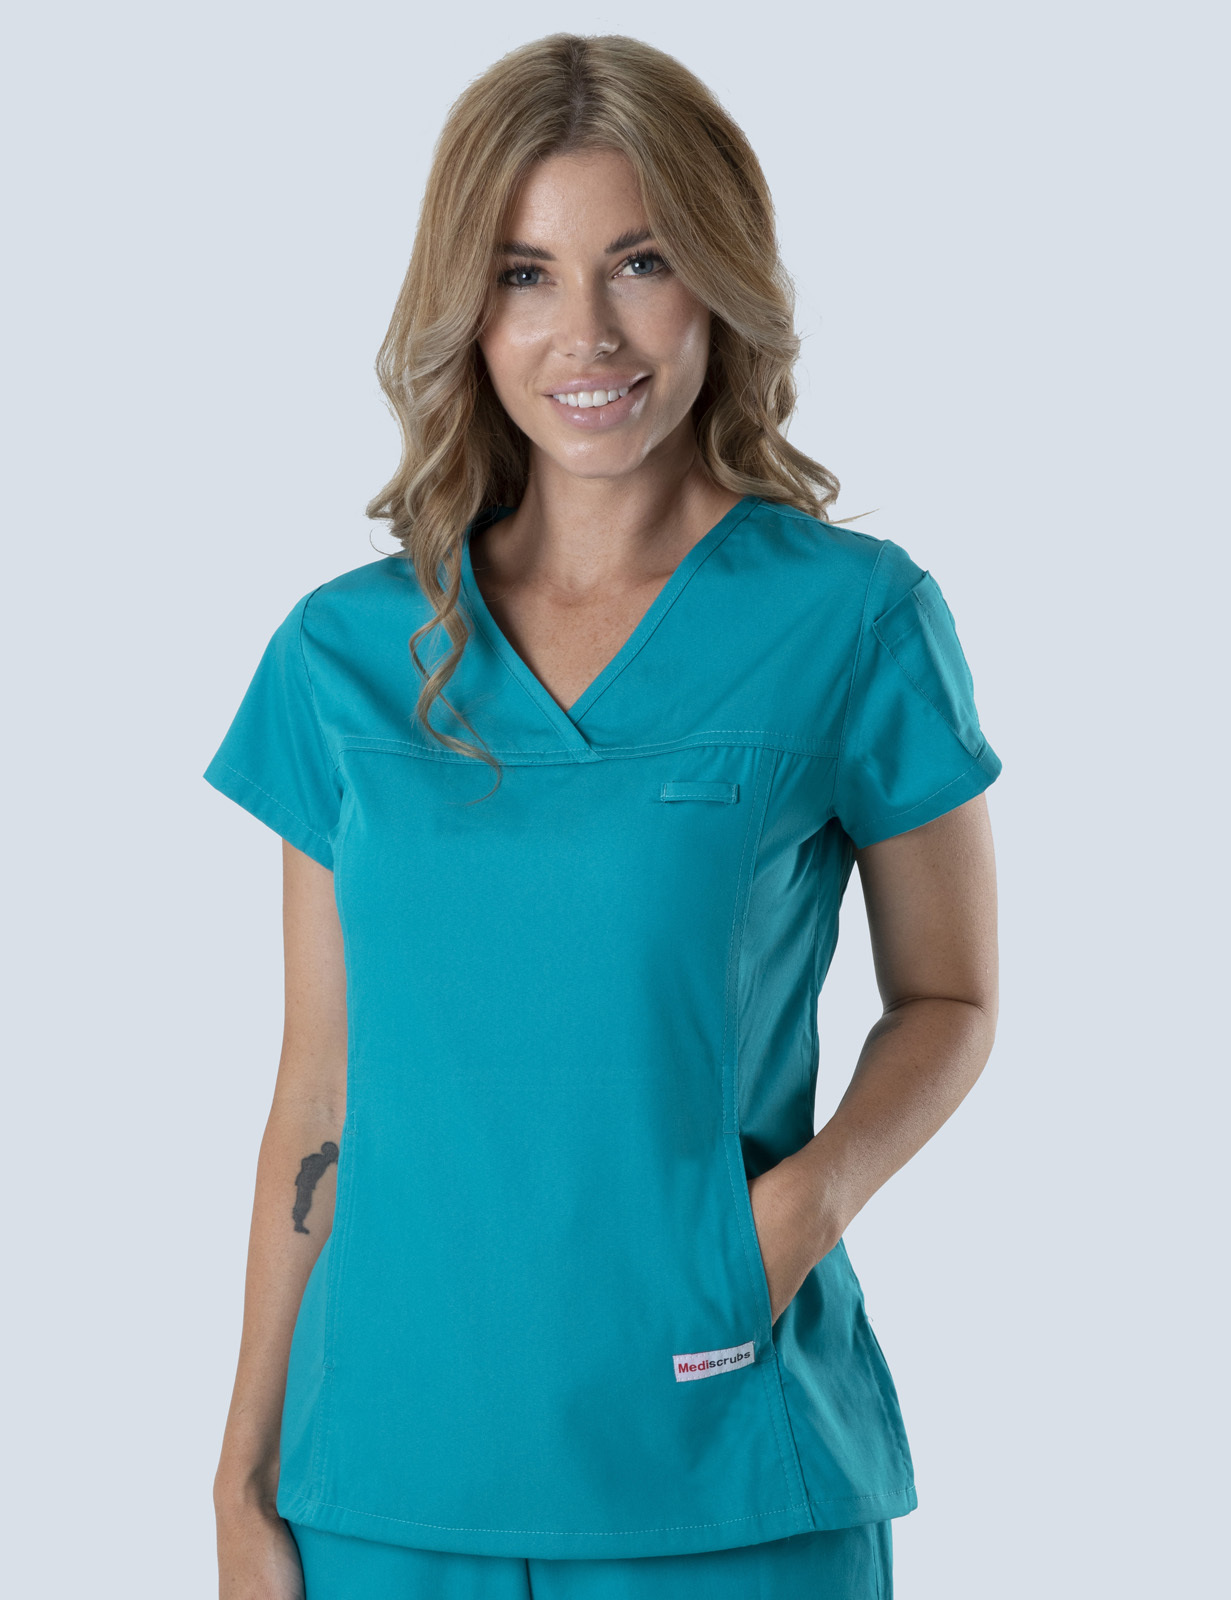 Queensland Children's Hospital Emergency Department Assistant Nurse Unit Manager Uniform Top Bundle  (Women's Fit Top in Teal incl Logos)